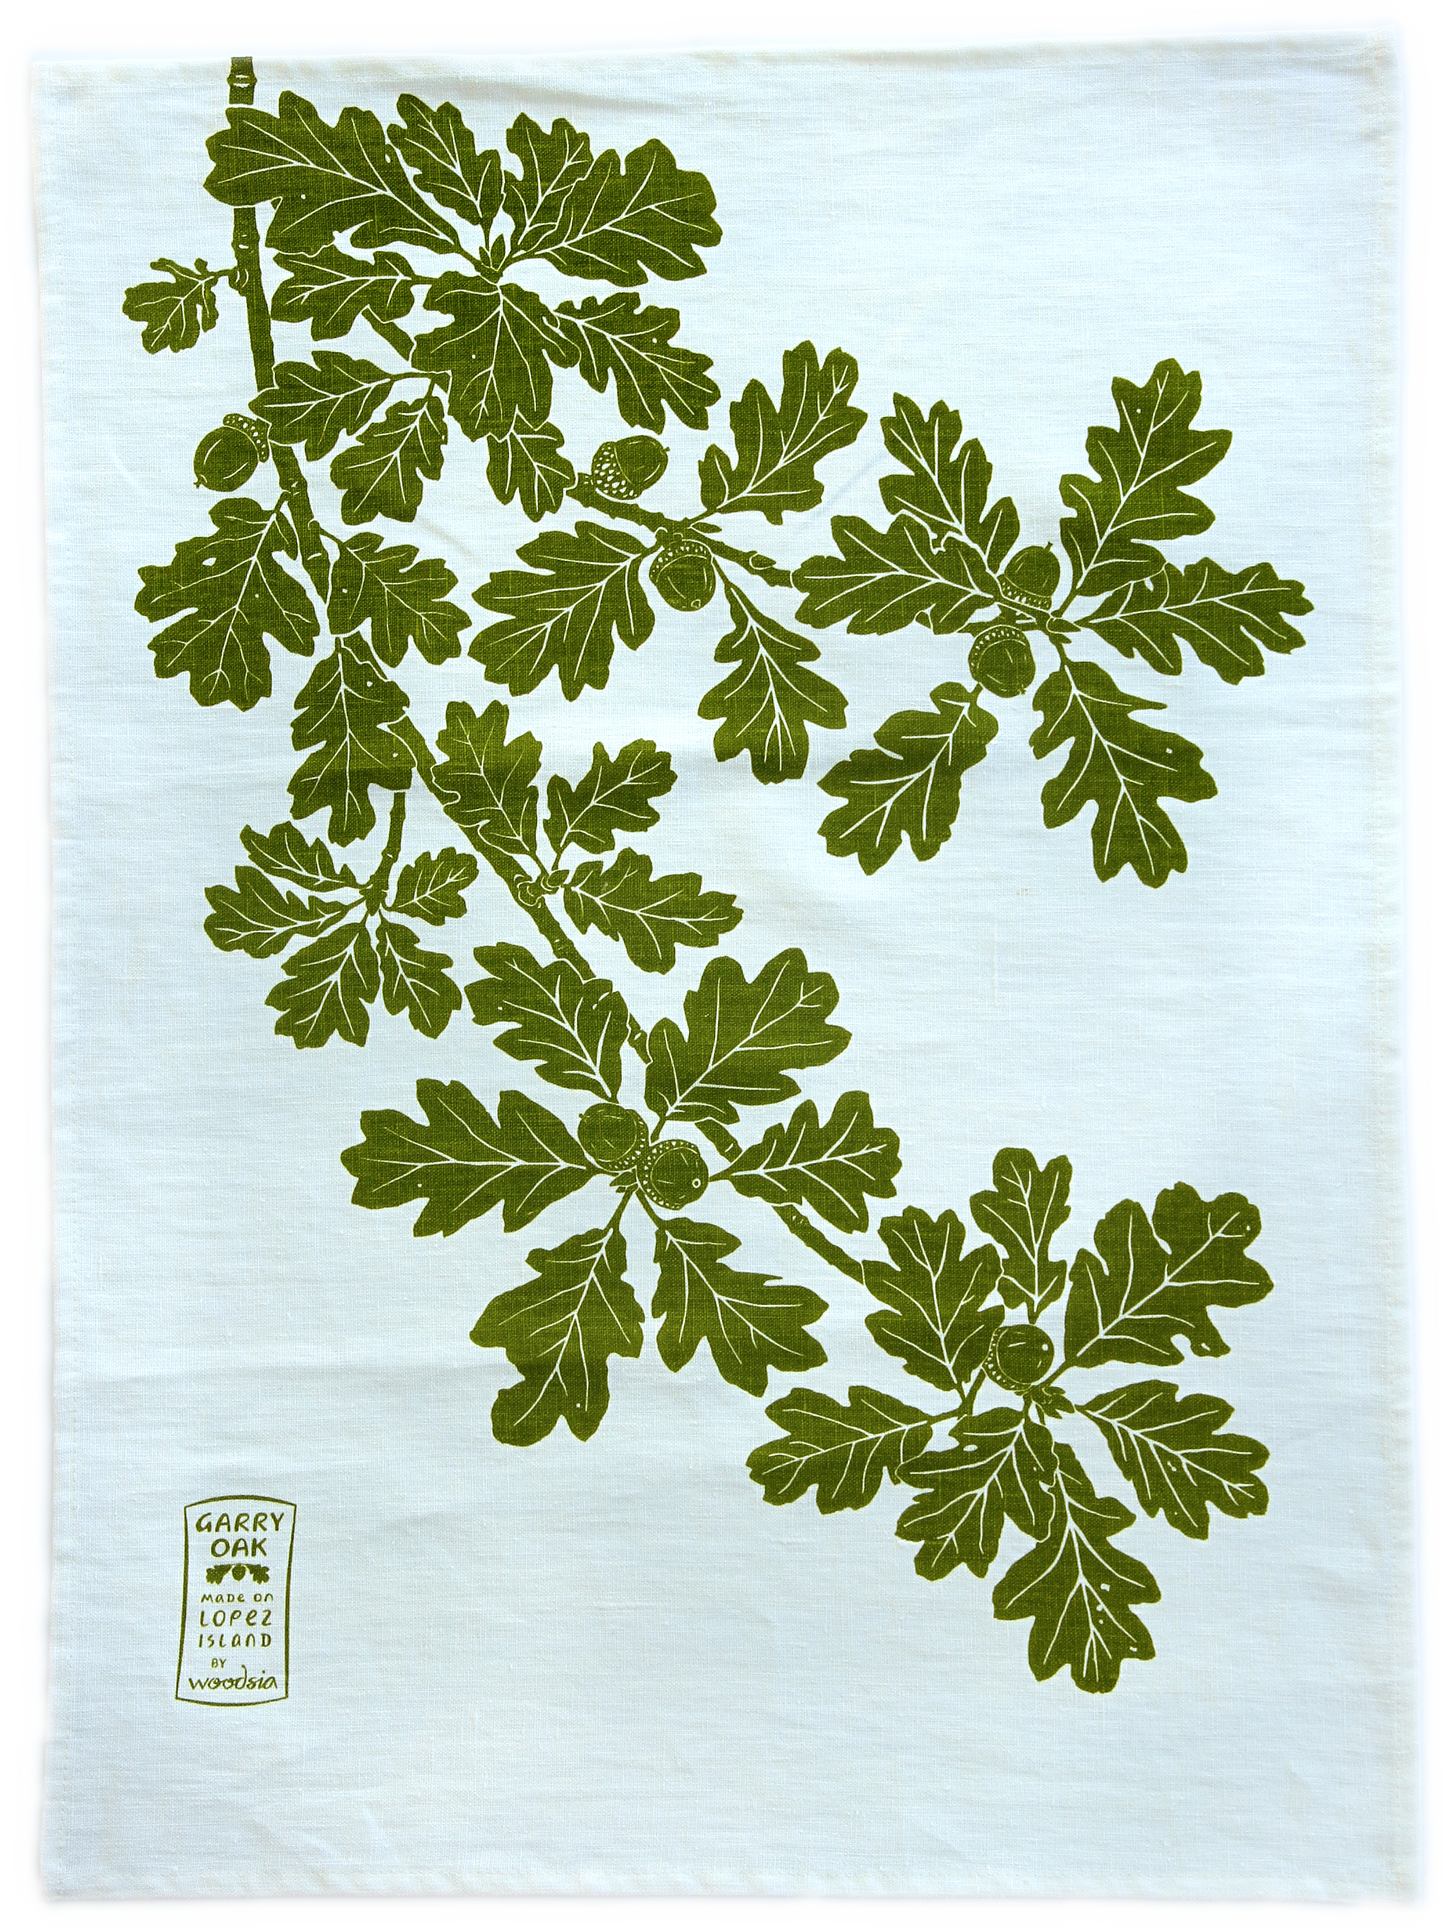 Garry Oak Kitchen Towel in Spring Green on White Linen